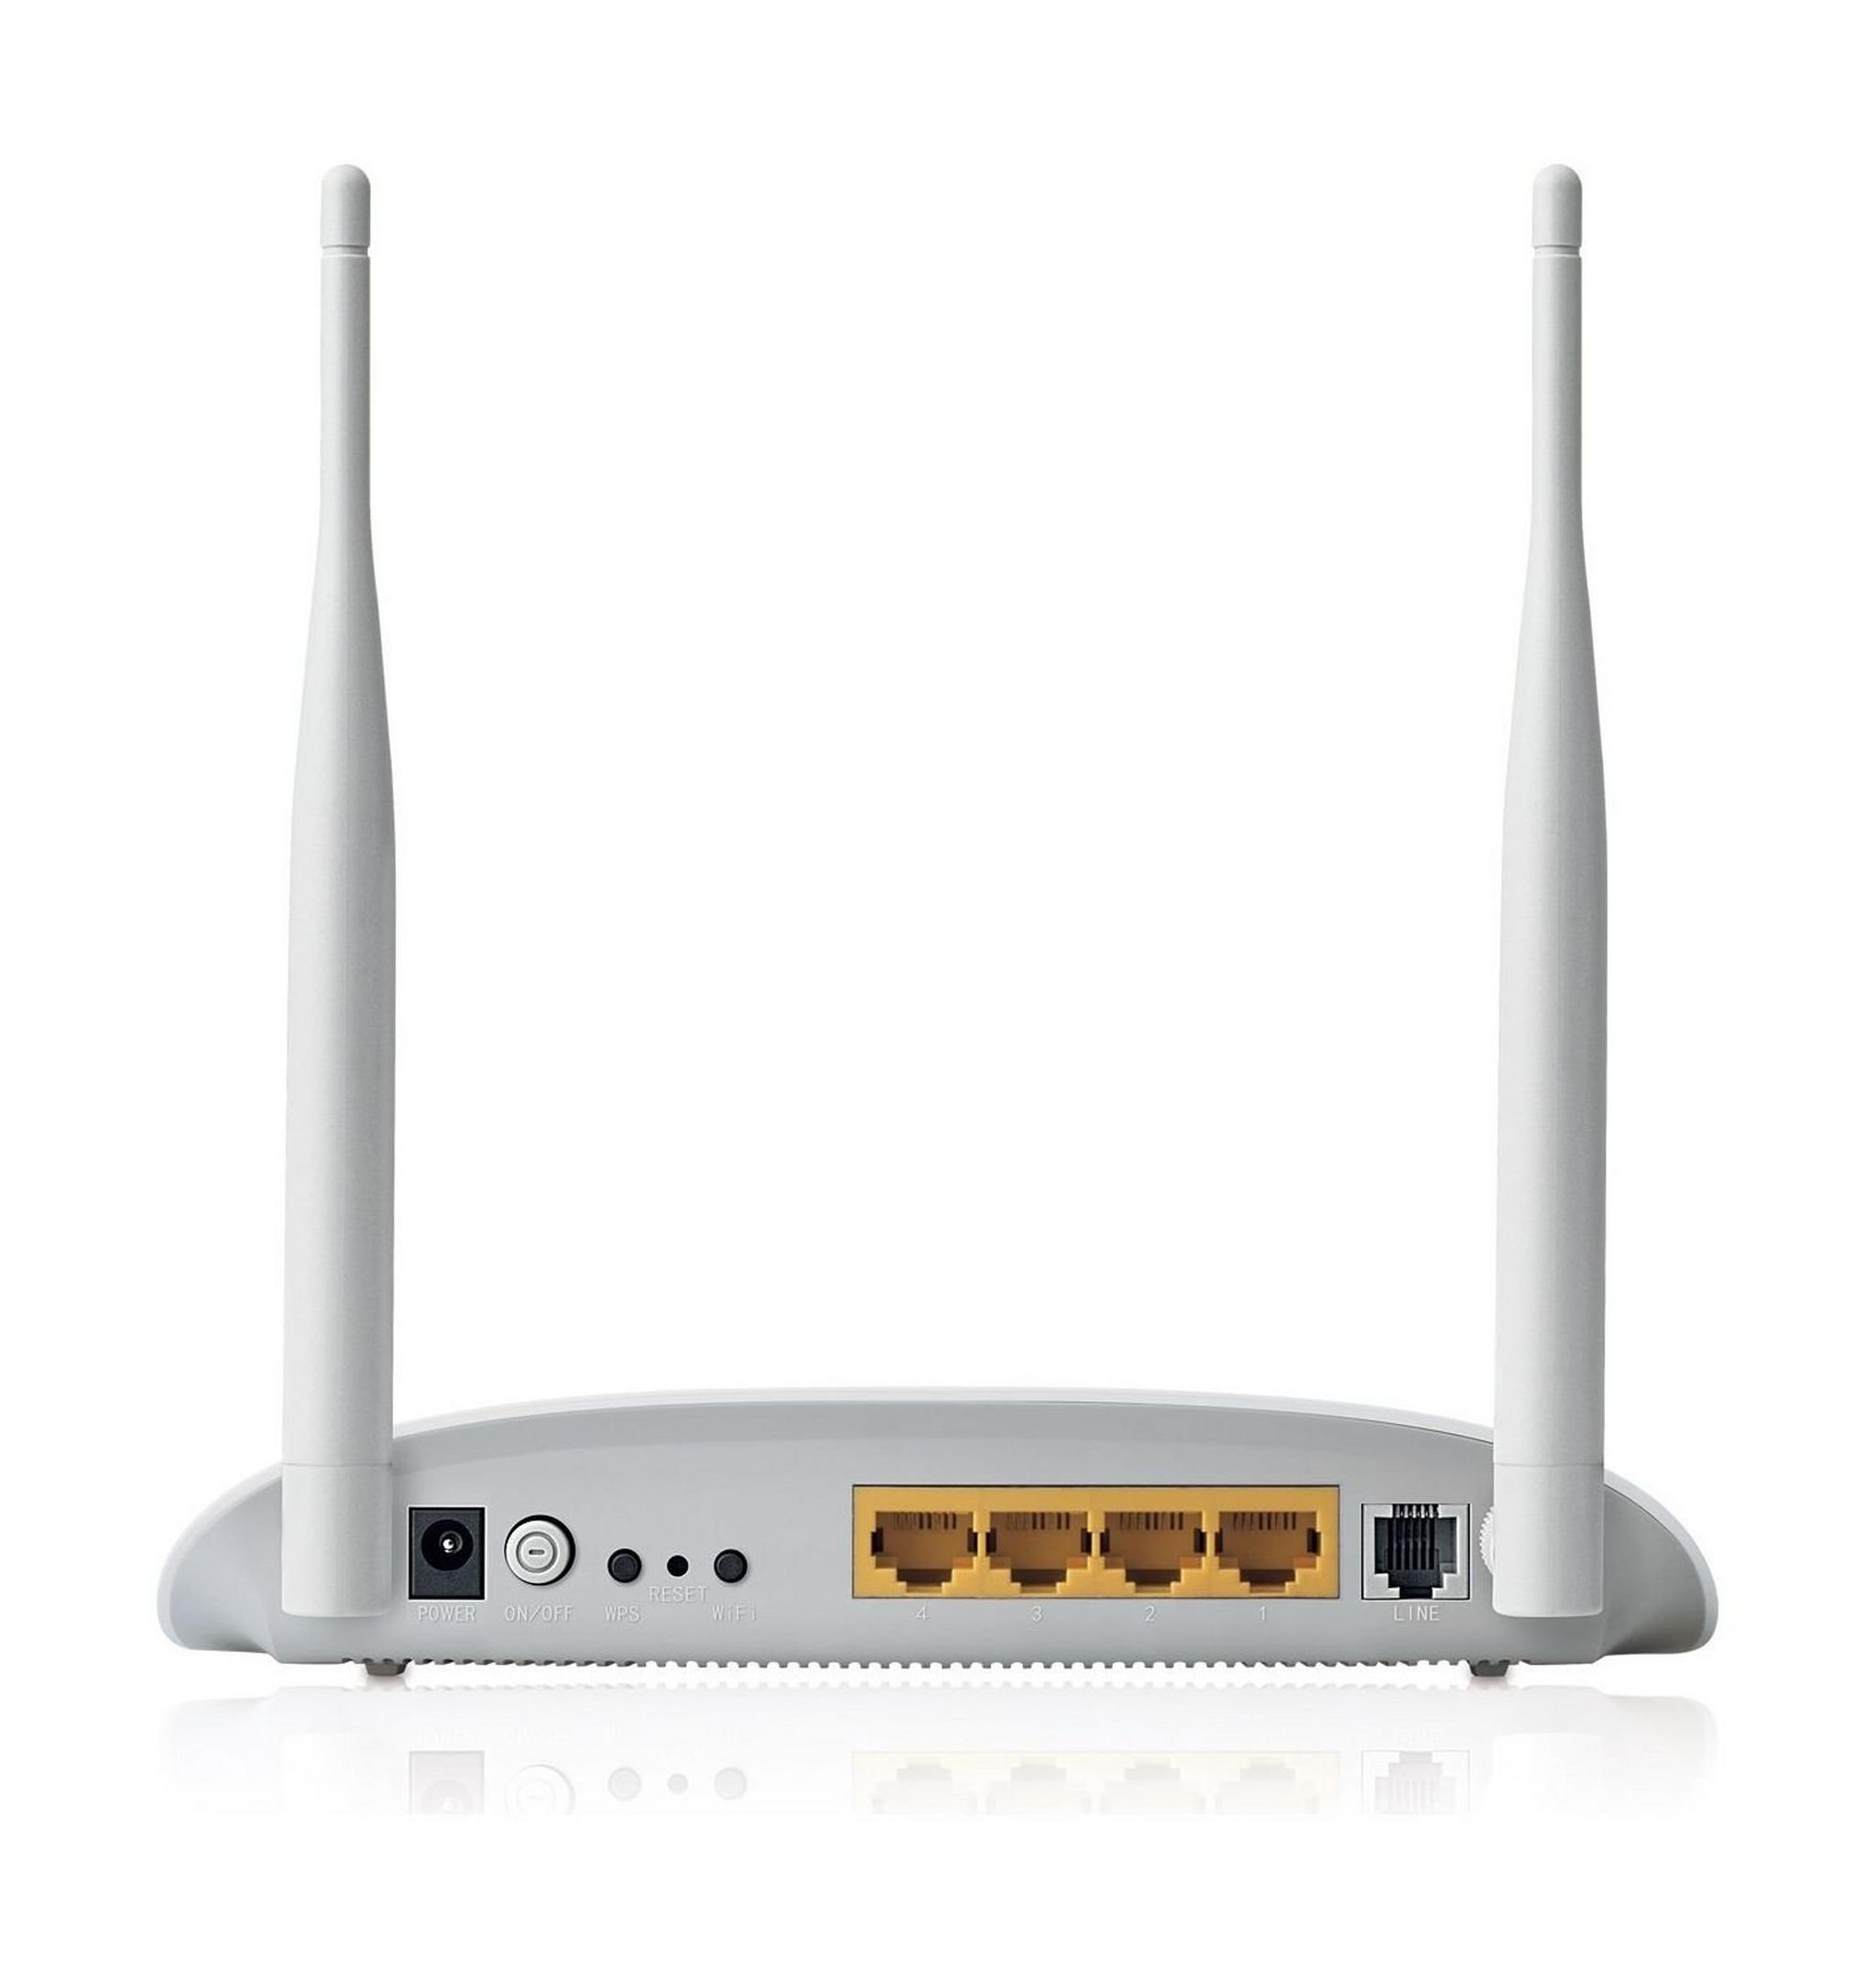 TP-Link TD-W8961ND Wireless N ADSL2+ Modem Router - 300 Mbps